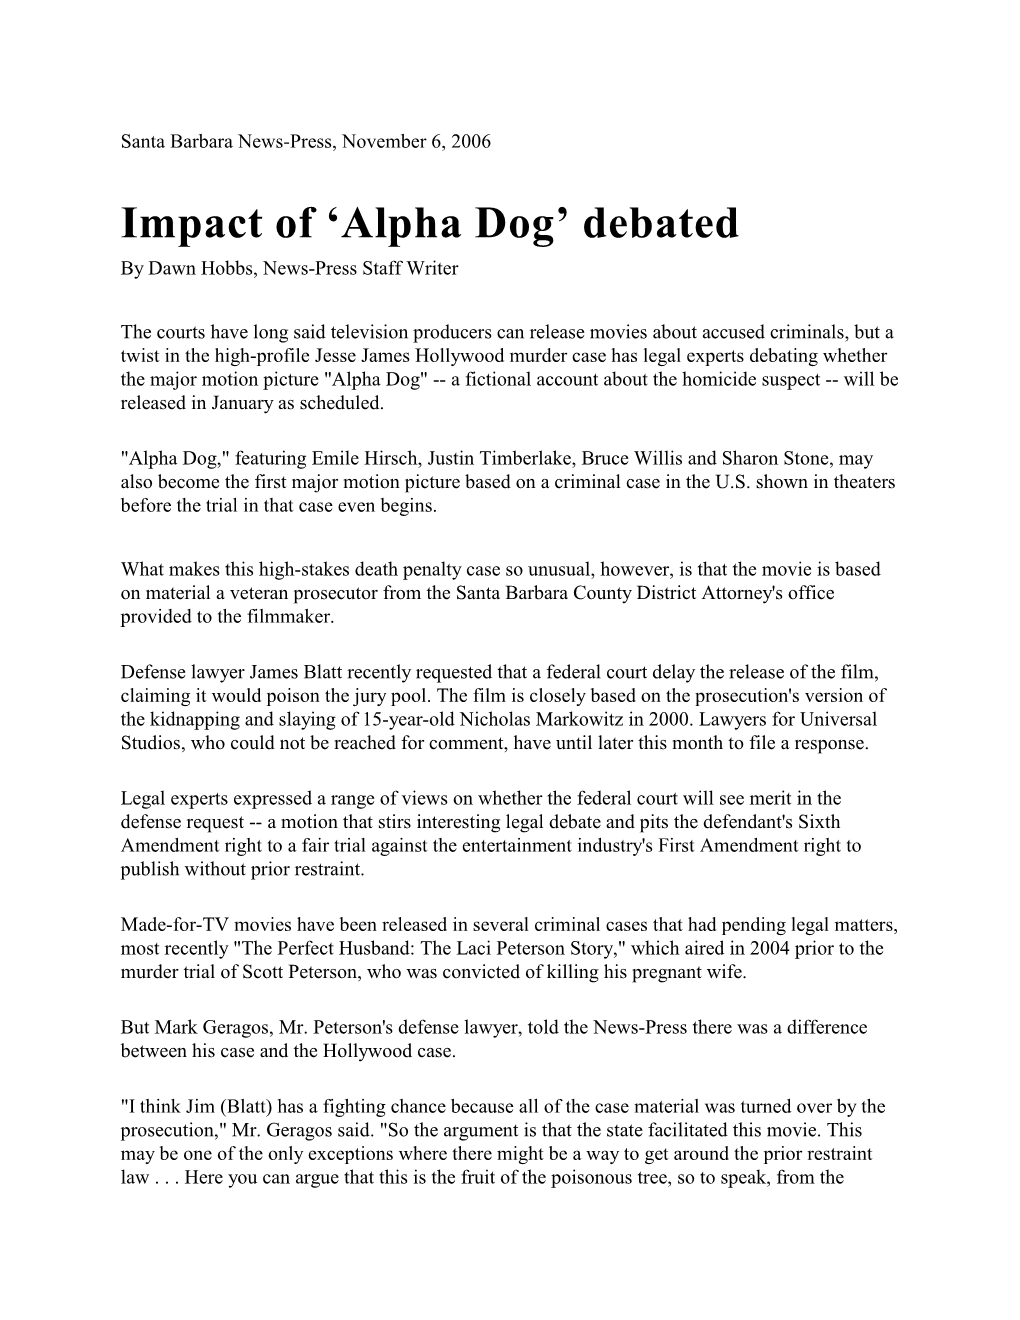 Alpha Dog’ Debated by Dawn Hobbs, News-Press Staff Writer